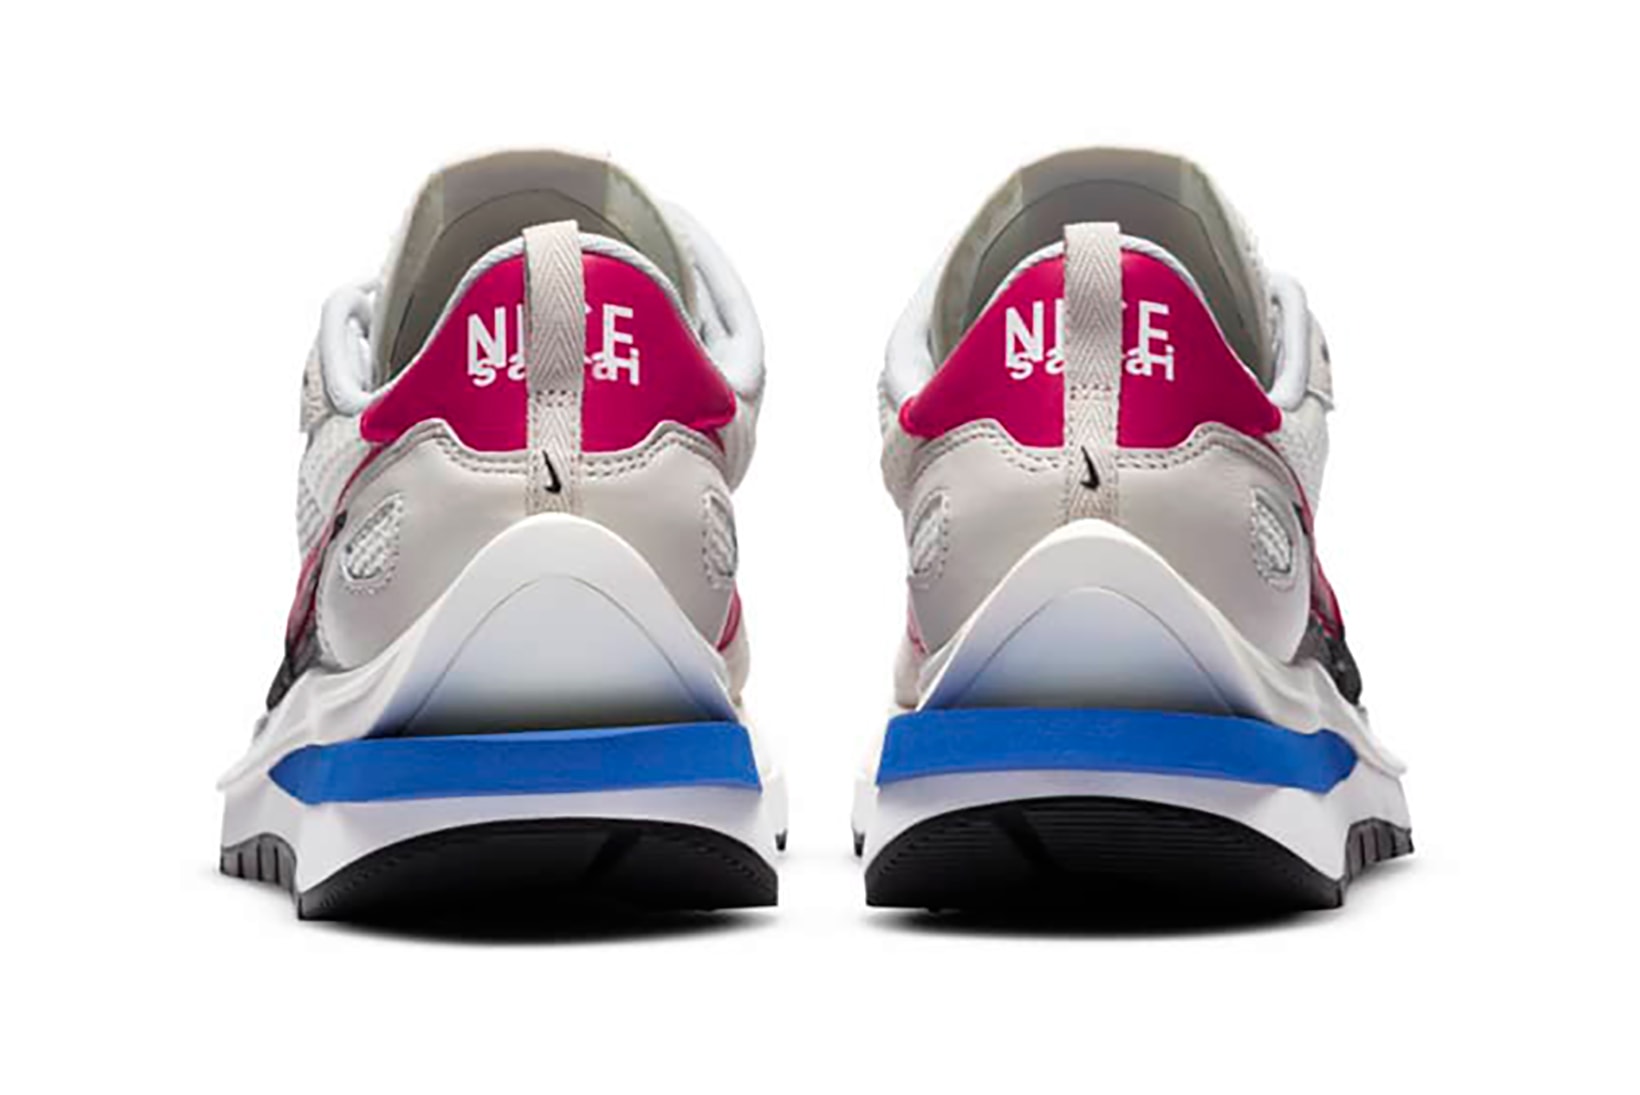 sacai nike collaboration vaporwaffle sneakers black white pink blue colorway sneakerhead footwear shoes chitose abe